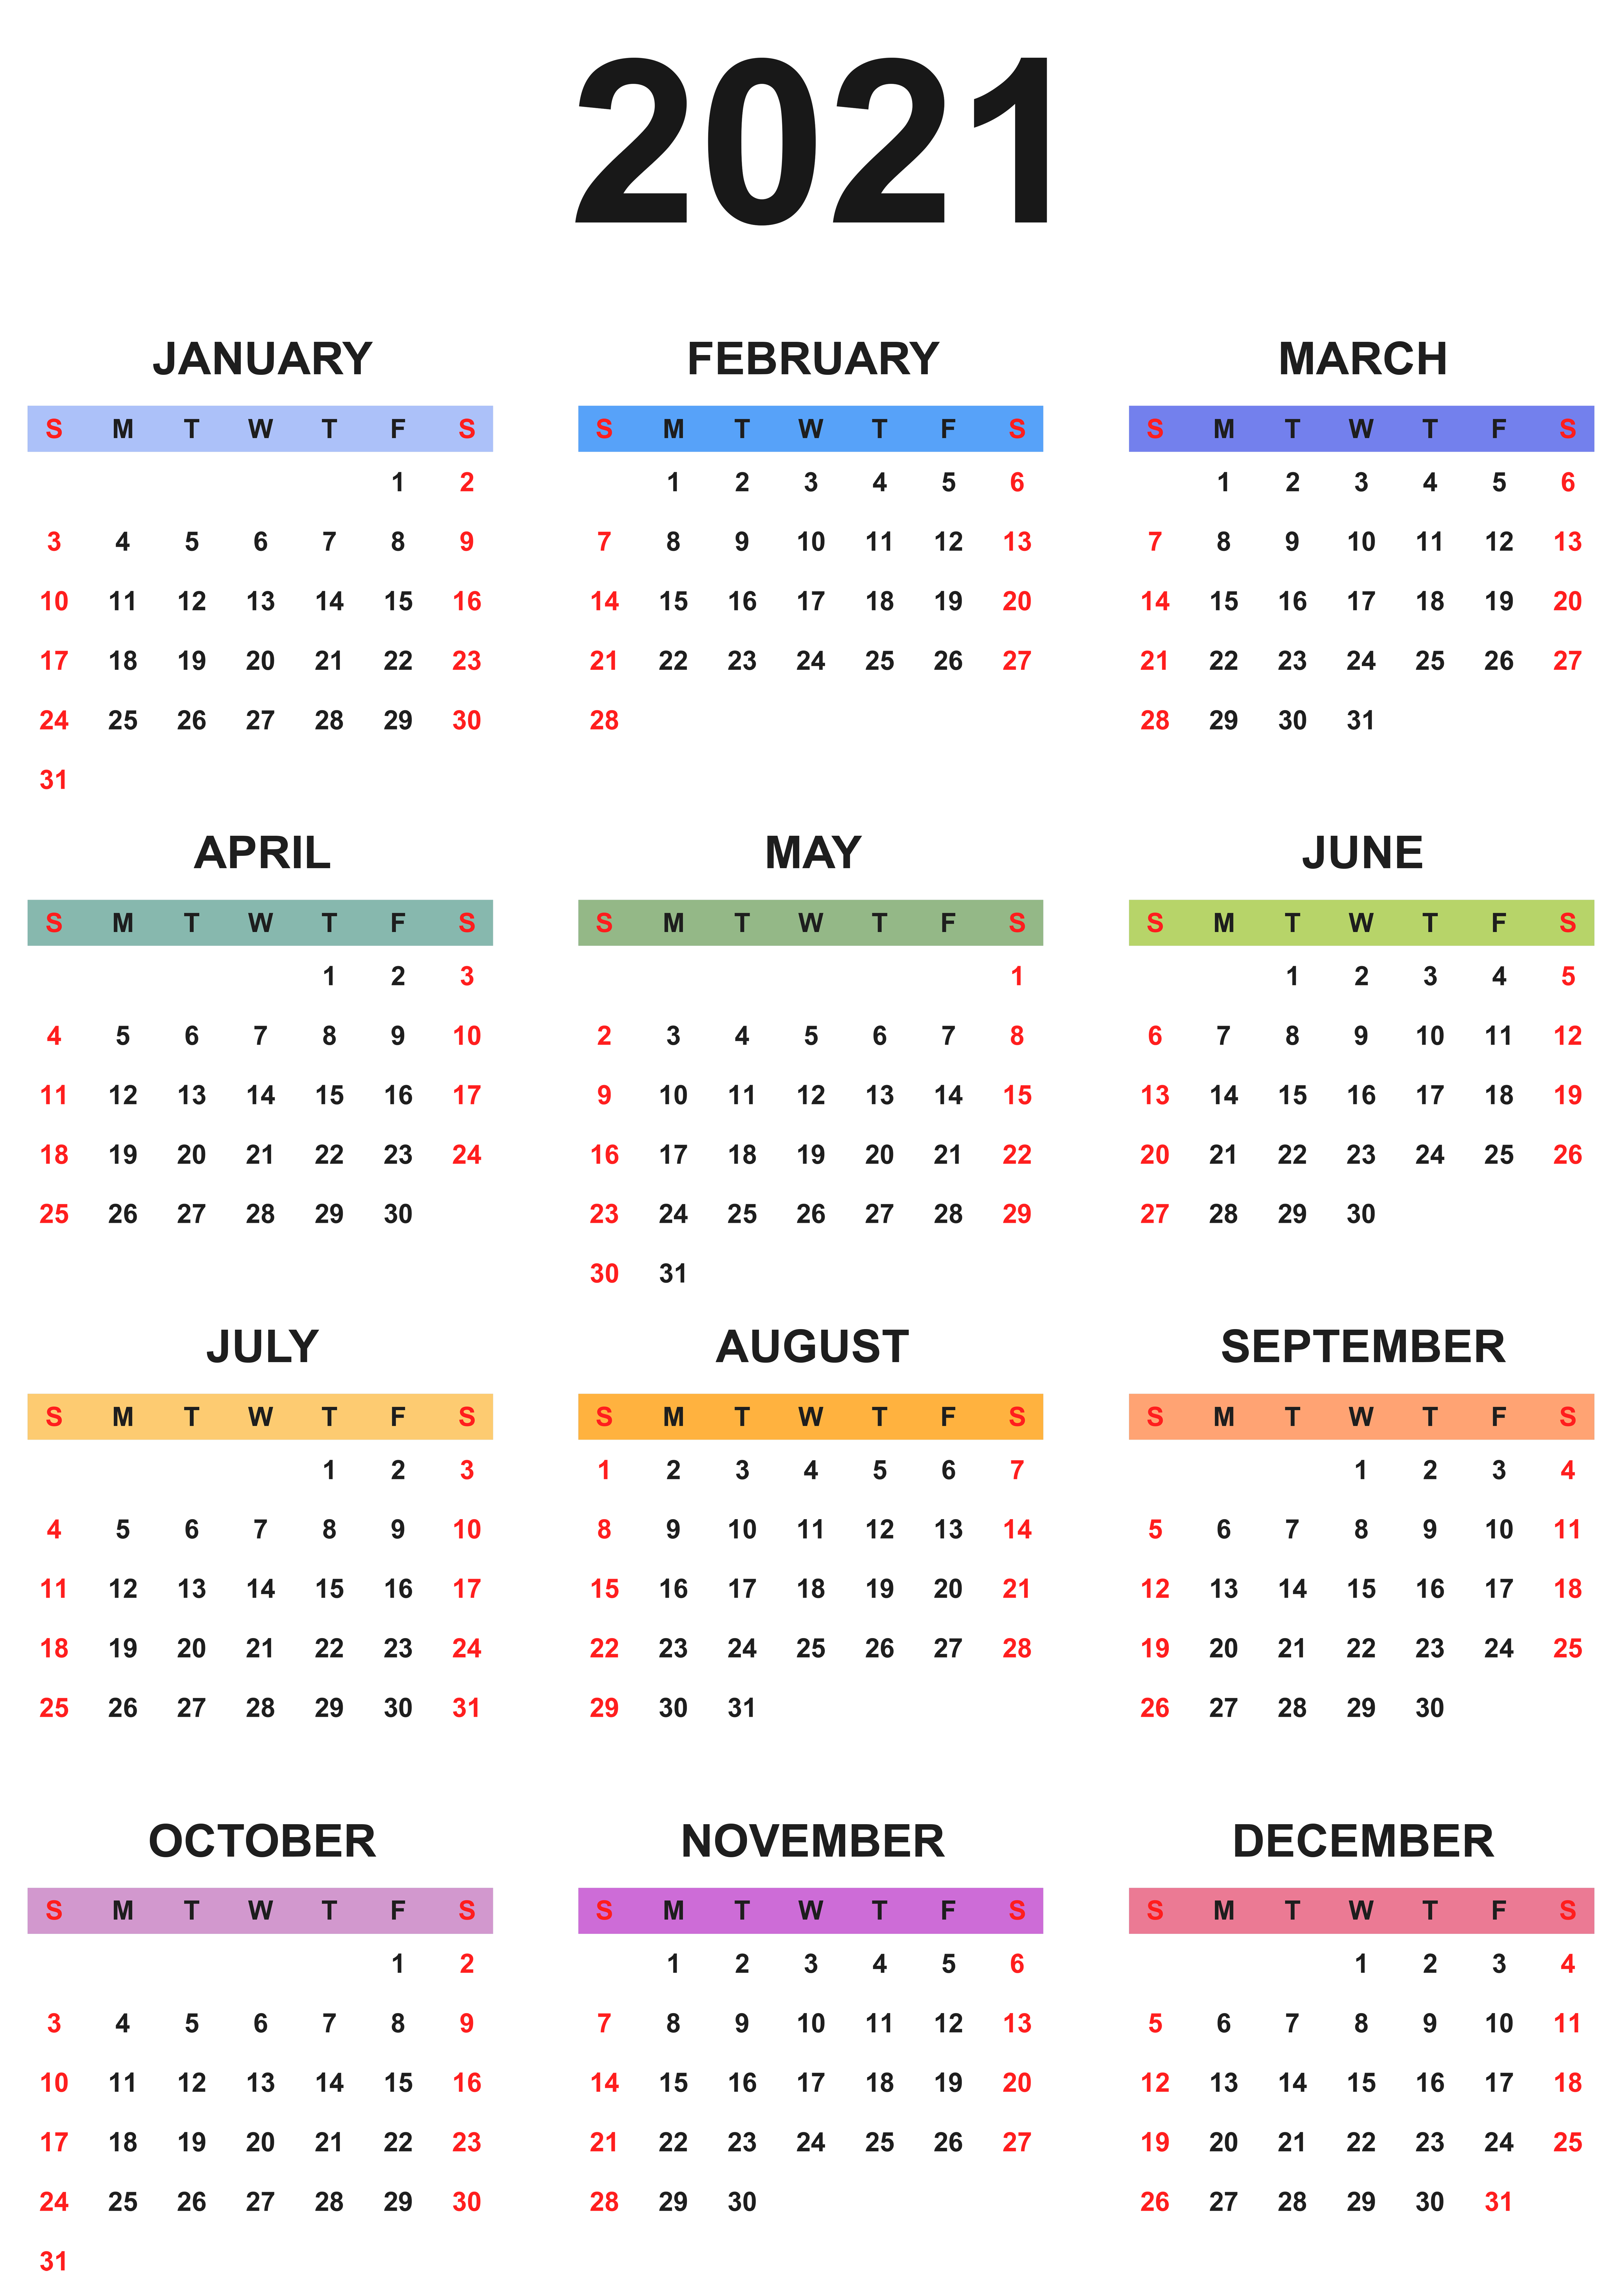 2021 calendar colorful calendar transparent clipart gallery #41228